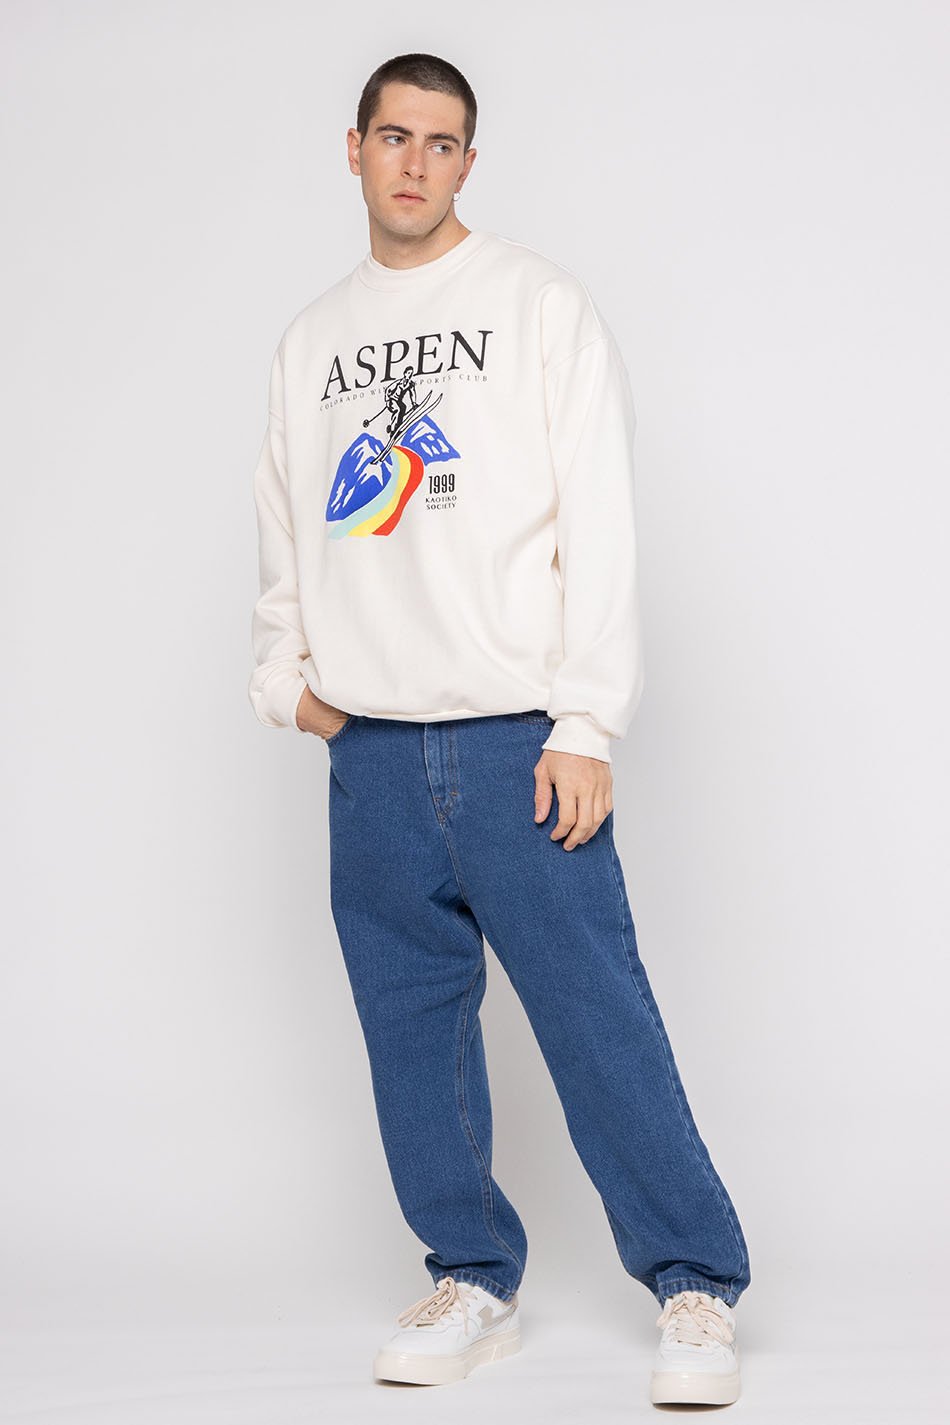 Ivory Aspen Sweatshirt